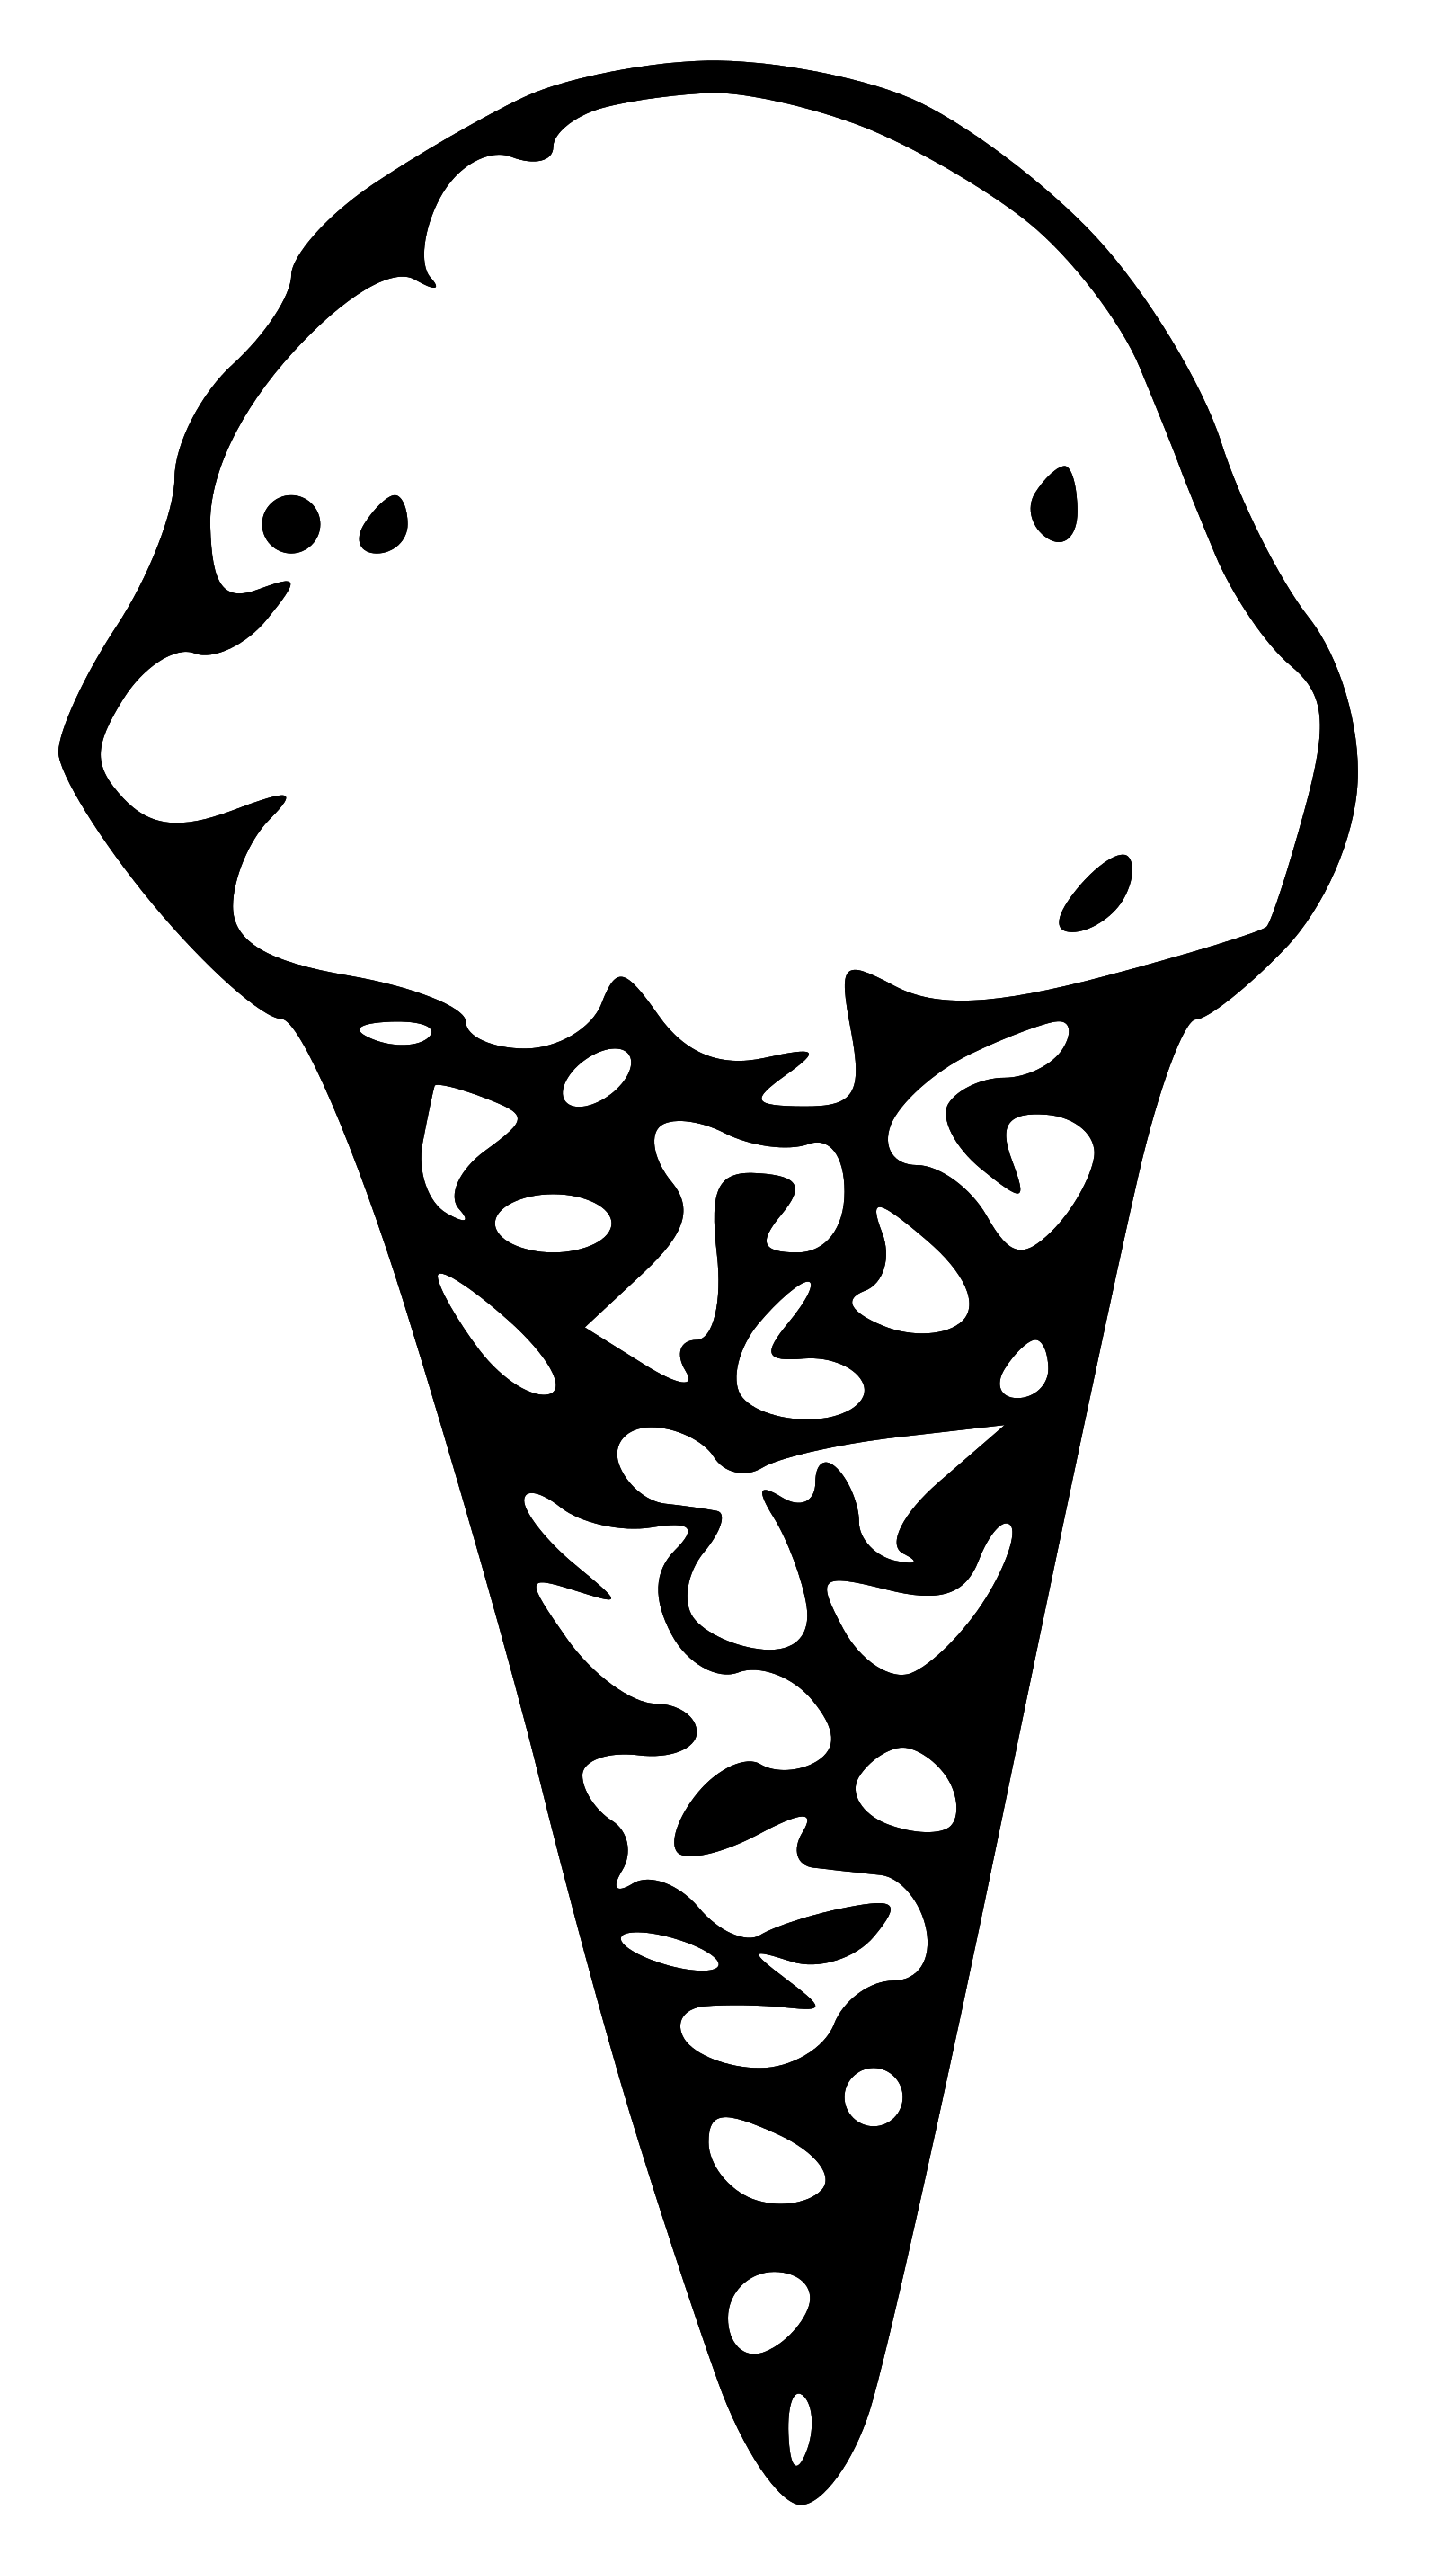 ice cream cone outline clip art - photo #41